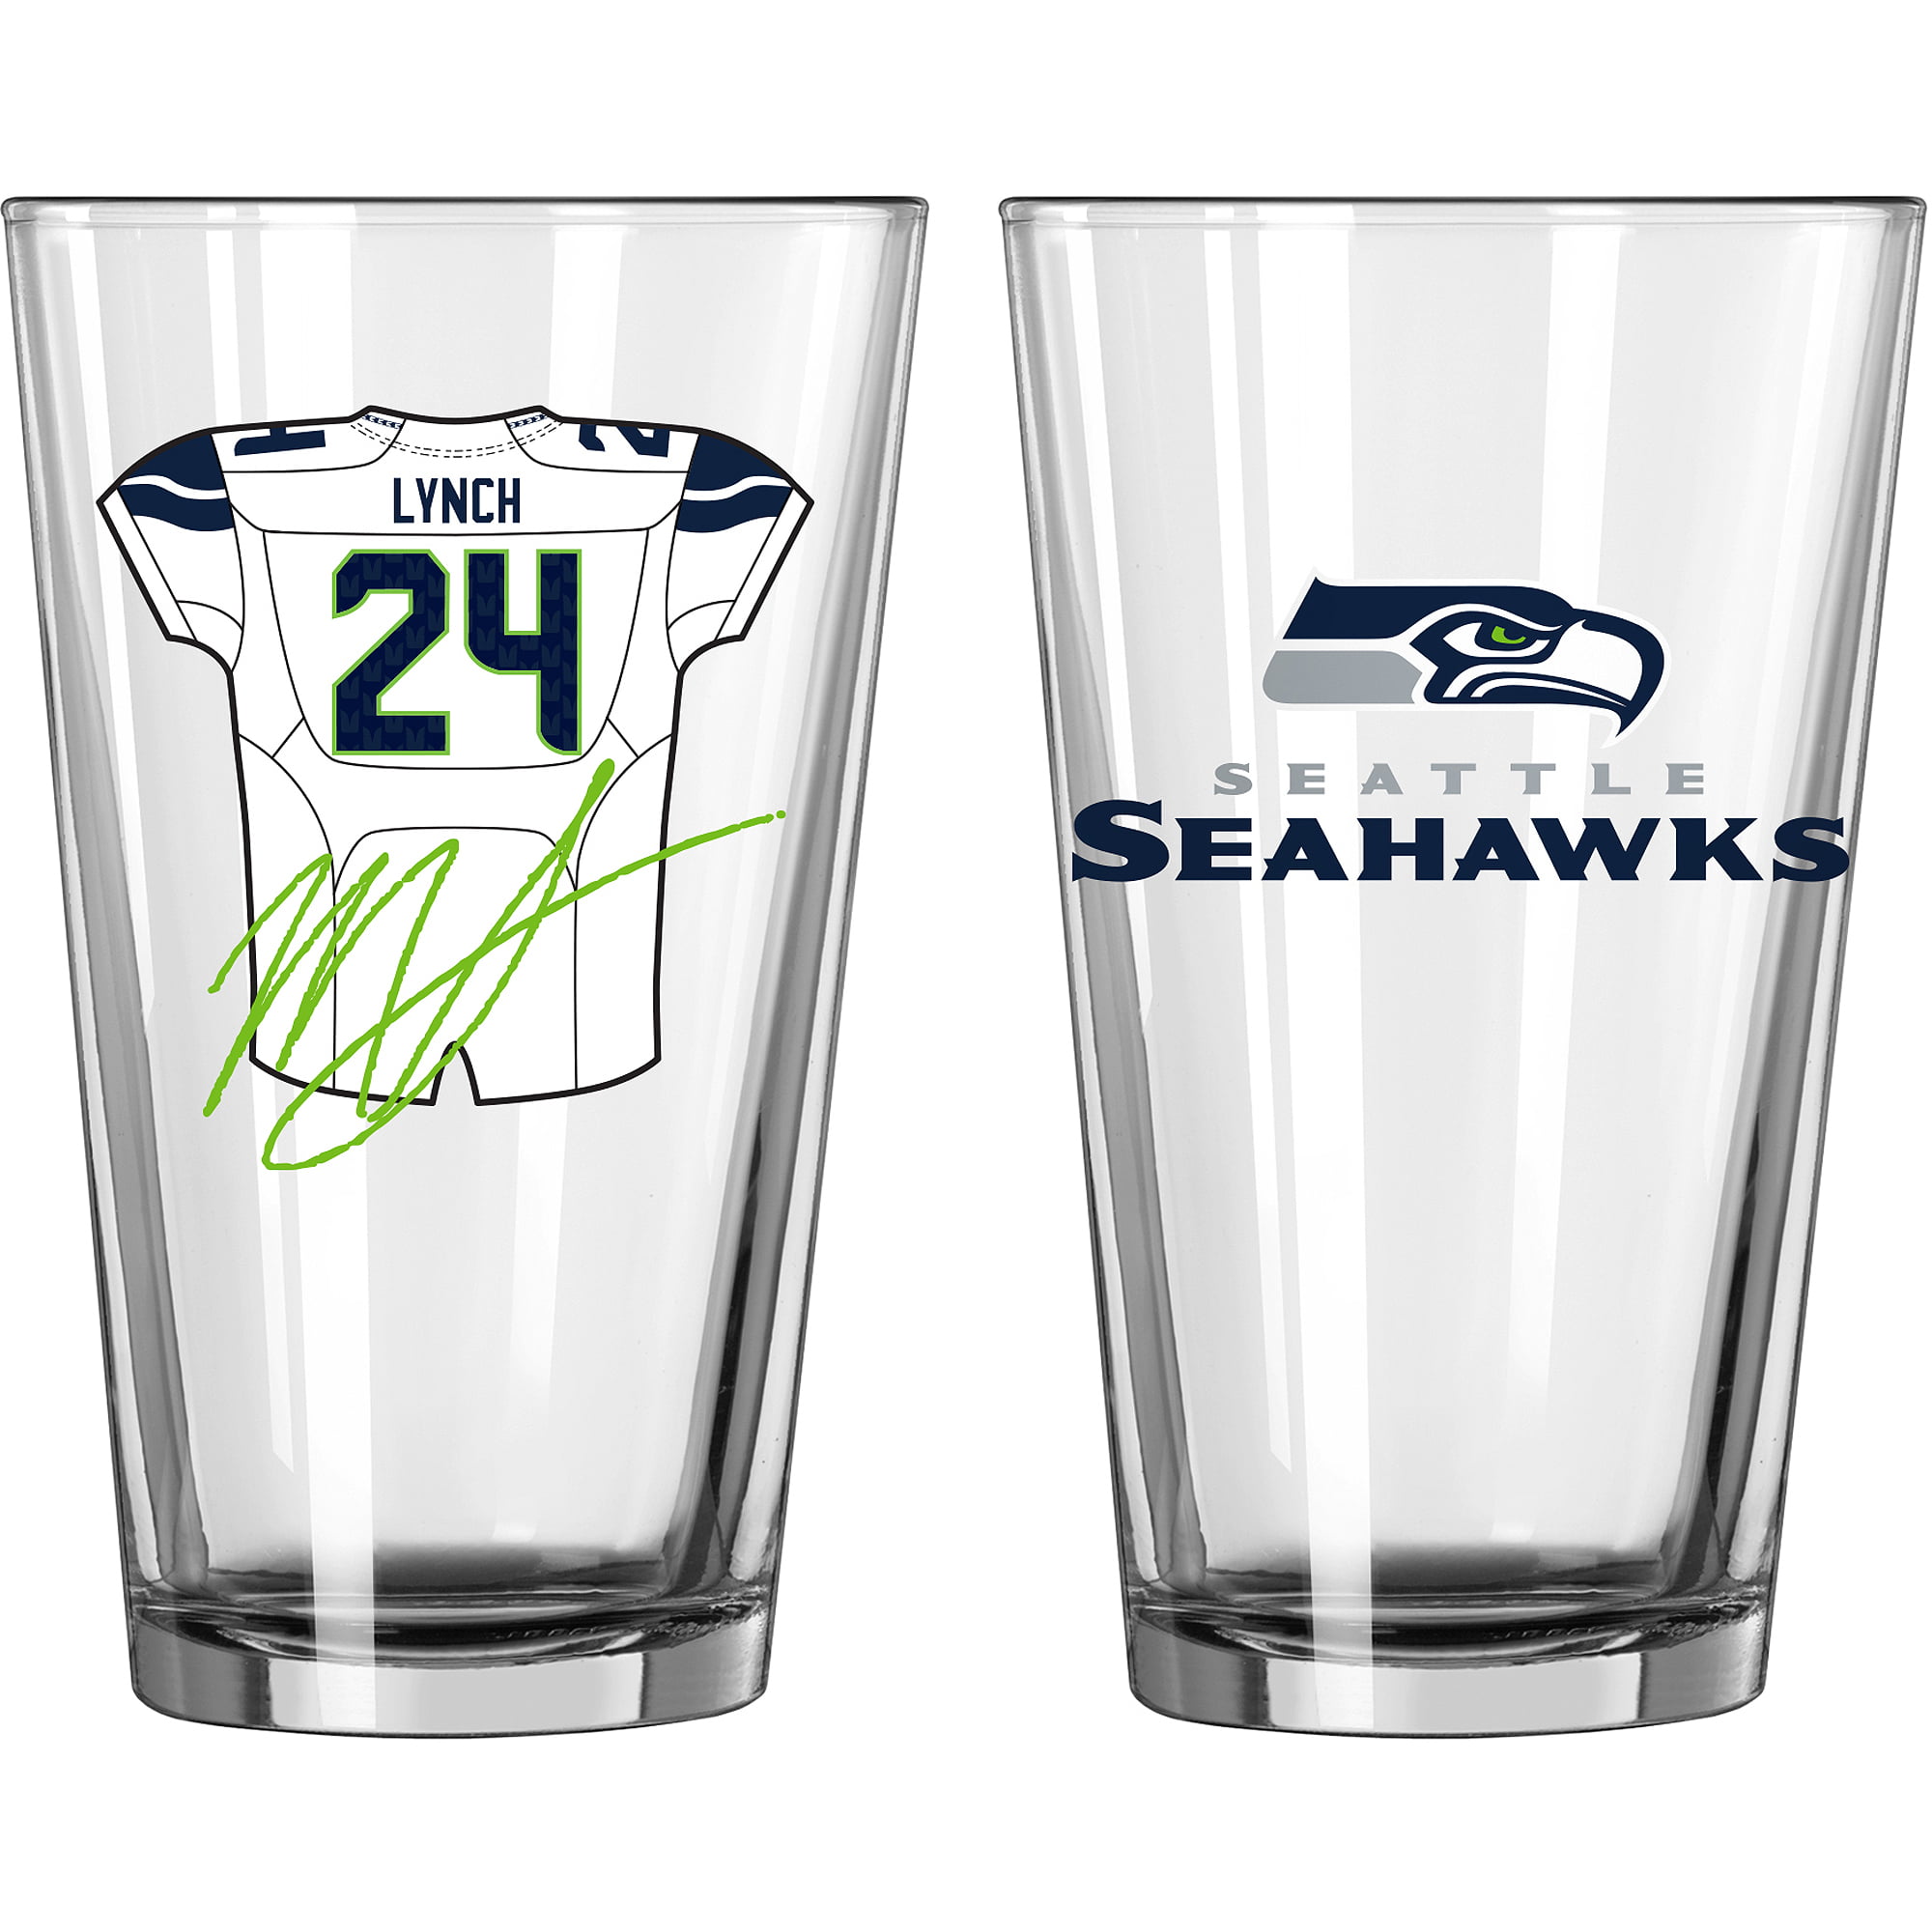 Seattle Seahawks Super Bowl XLVIII Champions Commemorative 16-Ounce Pint Glass & 4 Coasters Gift Set